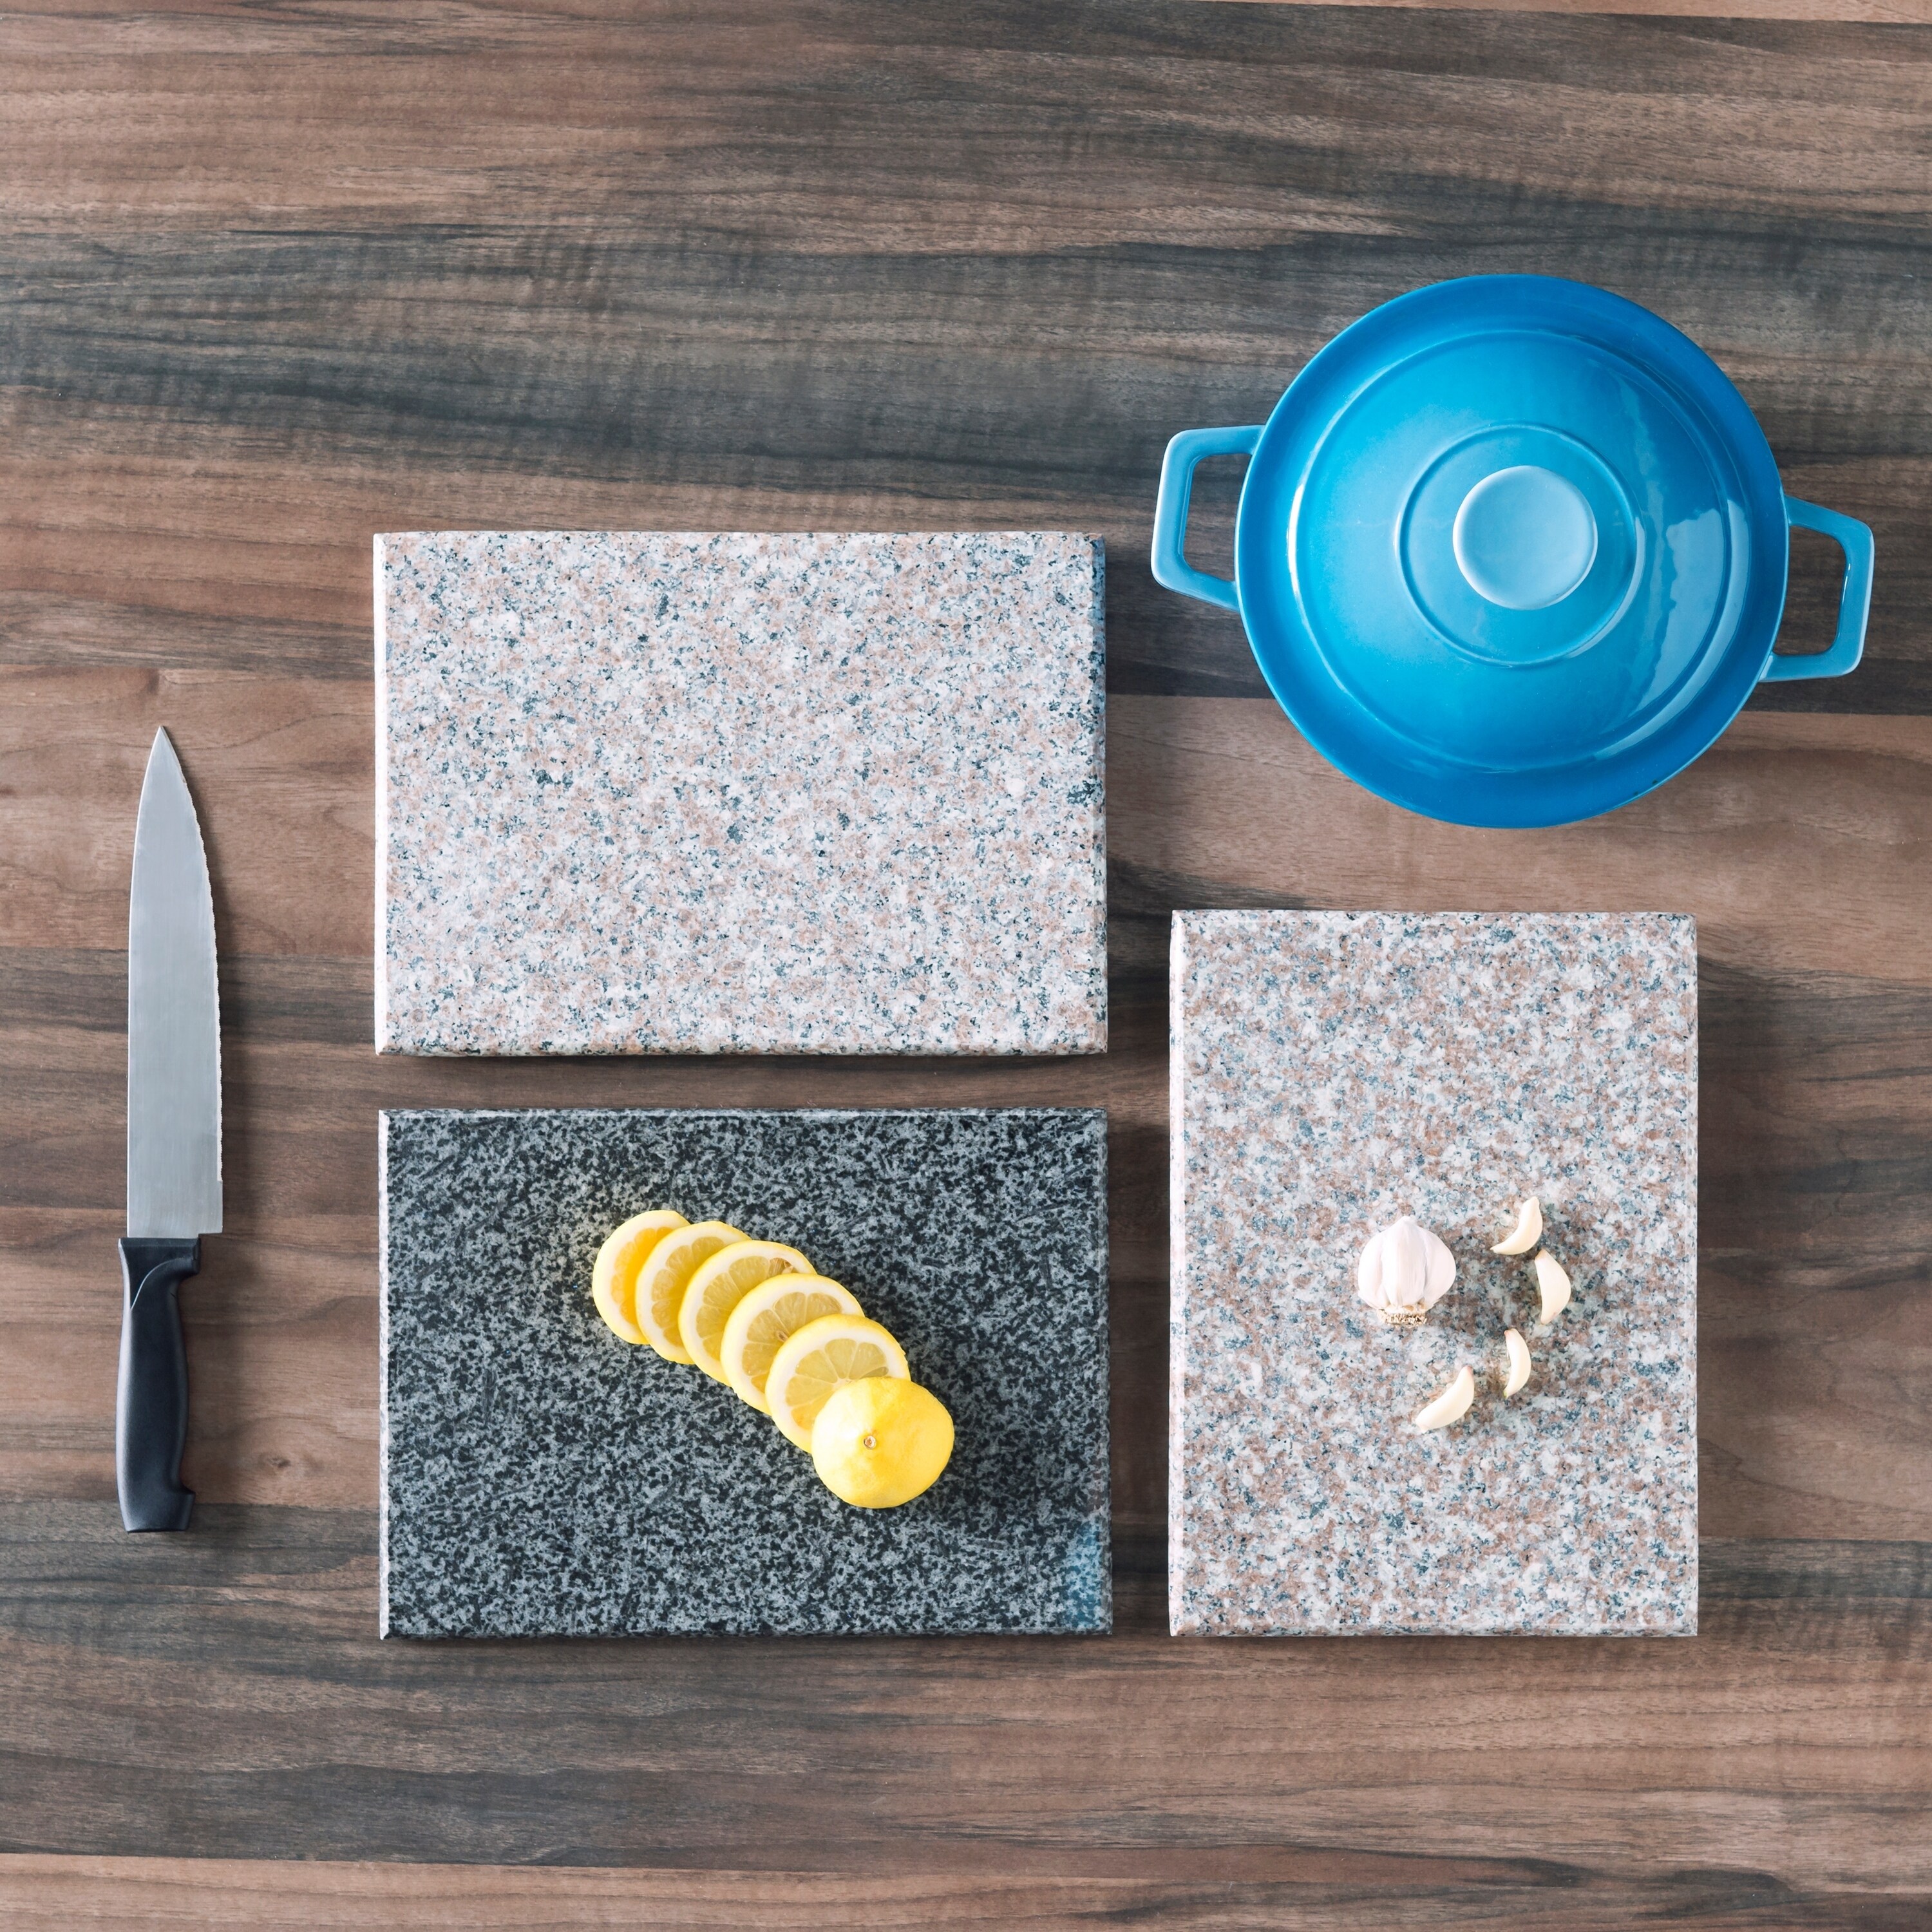 Home Basics Granite Cutting Board CB01880 - The Home Depot